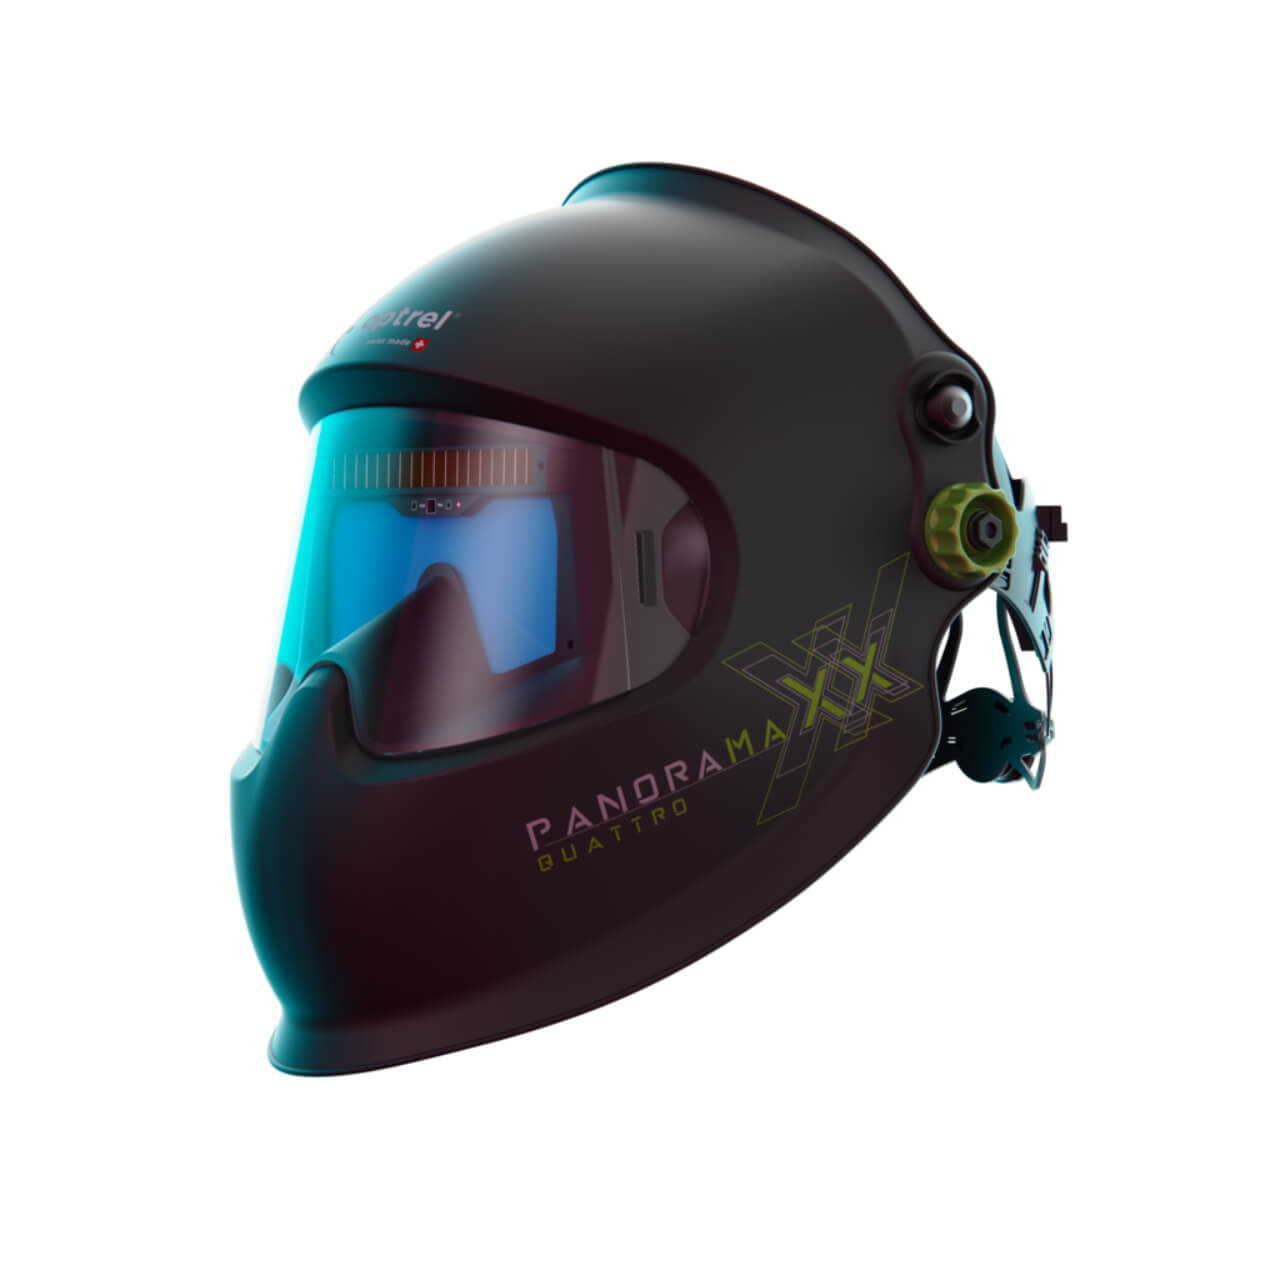 Optrel Panoramaxx Quattro Automatic Welding Helmet Black 4-13